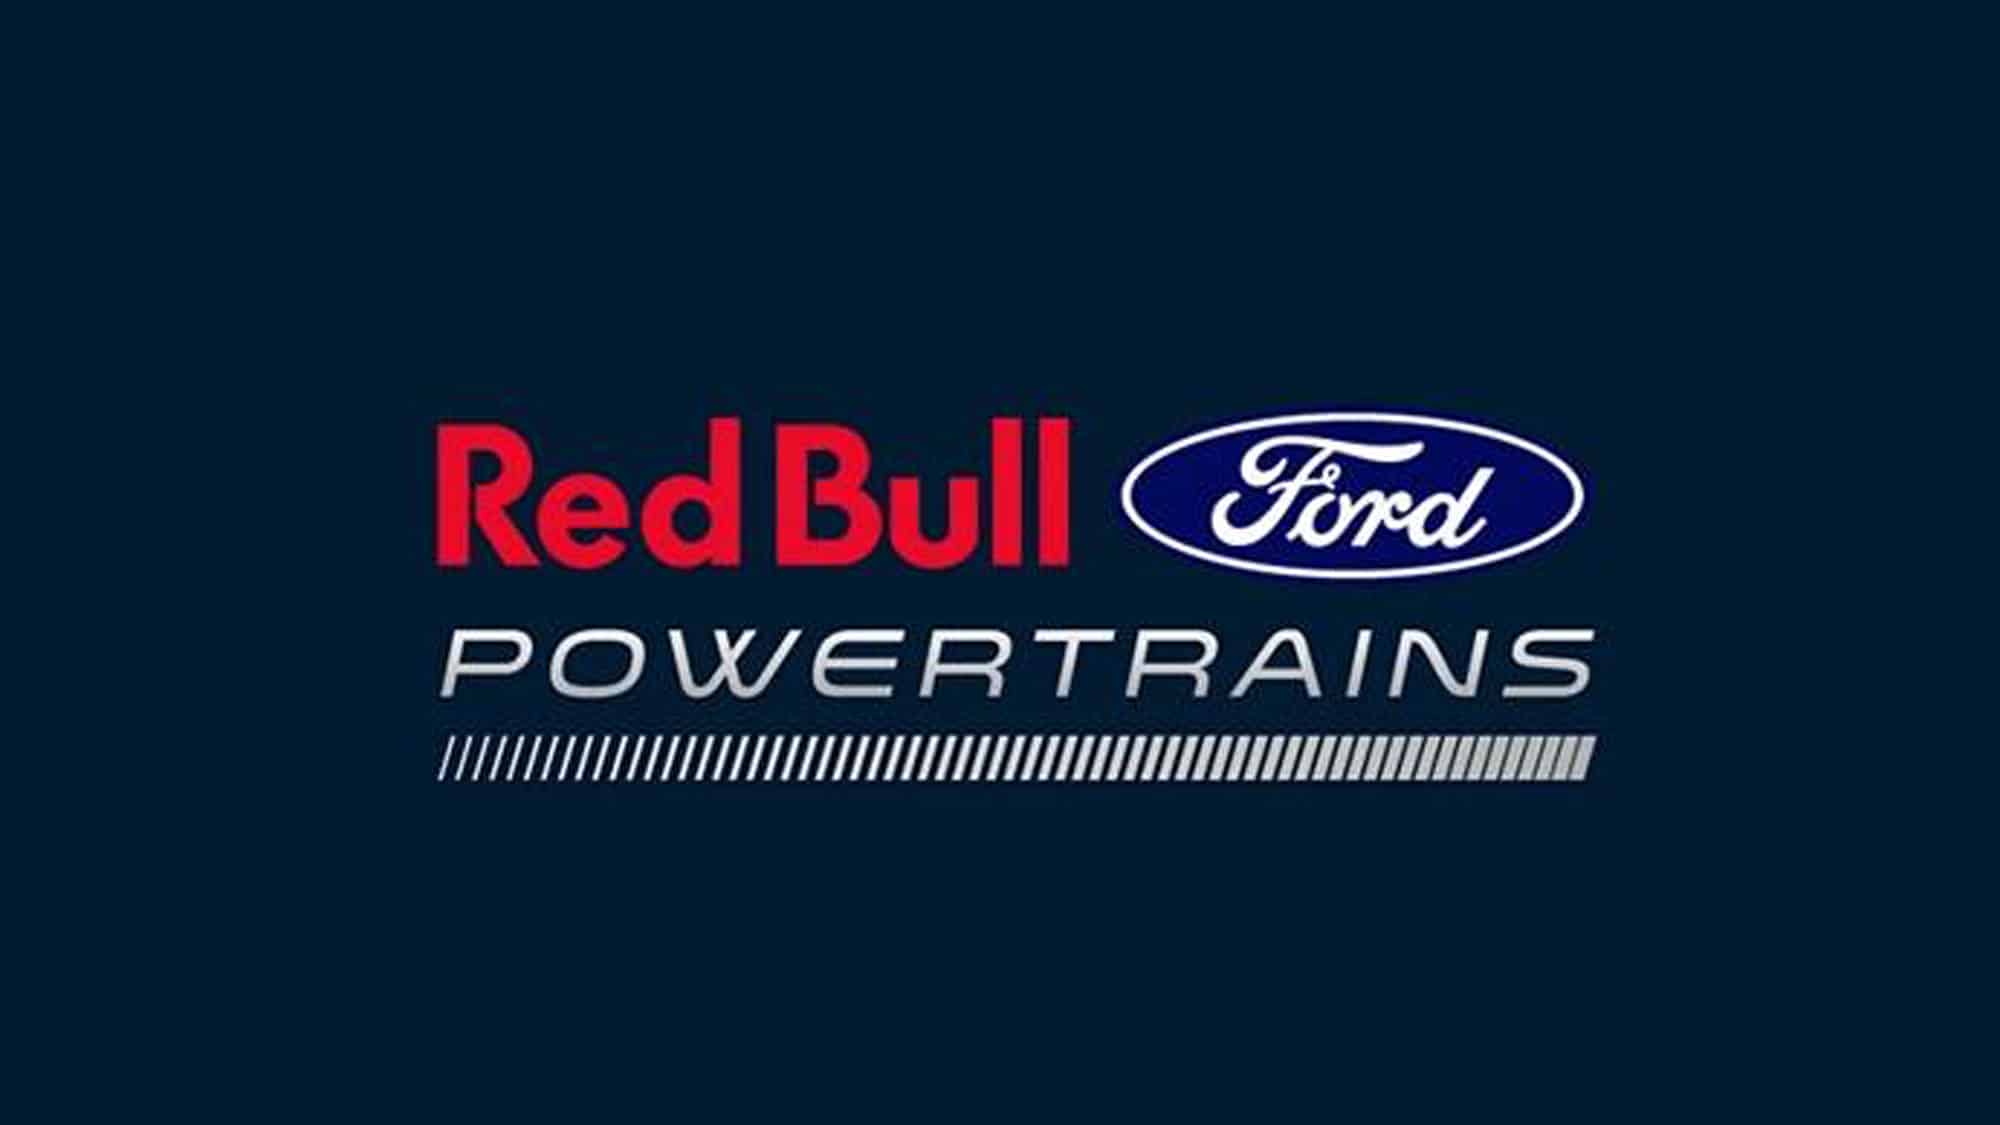 Red Bull Ford powertrains logo